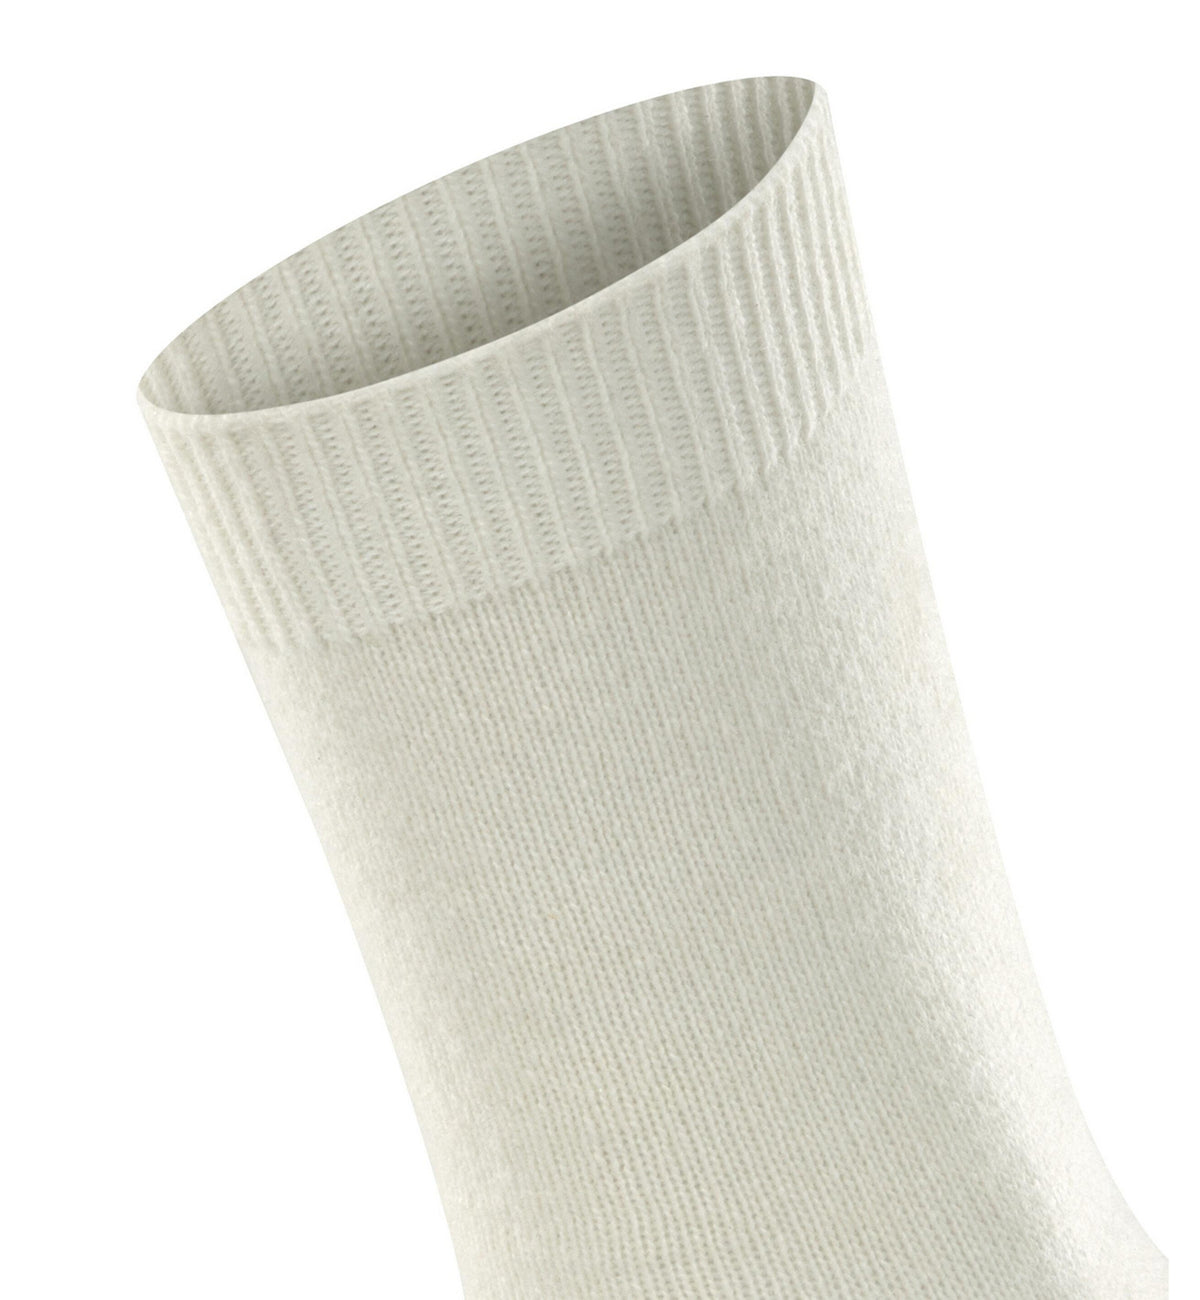 FALKE Cosy Wool Crew Socks (47548),5/7.5,Off White - Off White,5/7.5